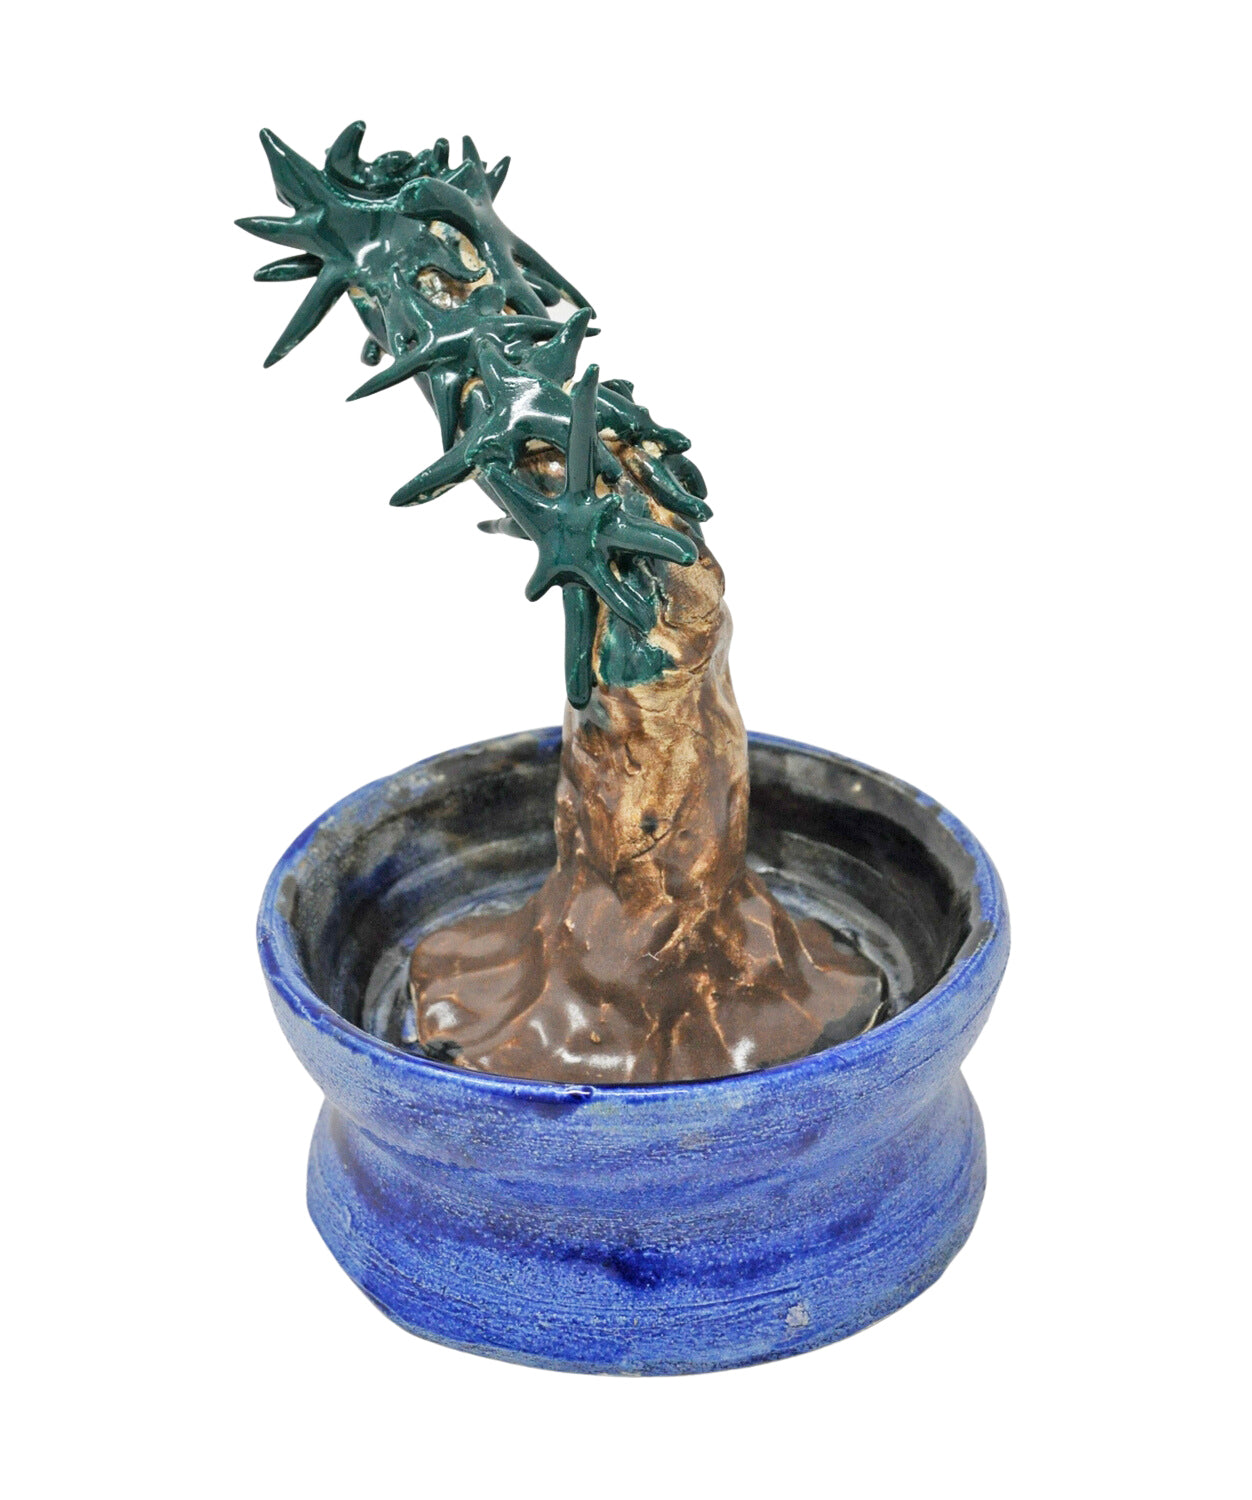 A ceramic sculpture of a prickly cactus.